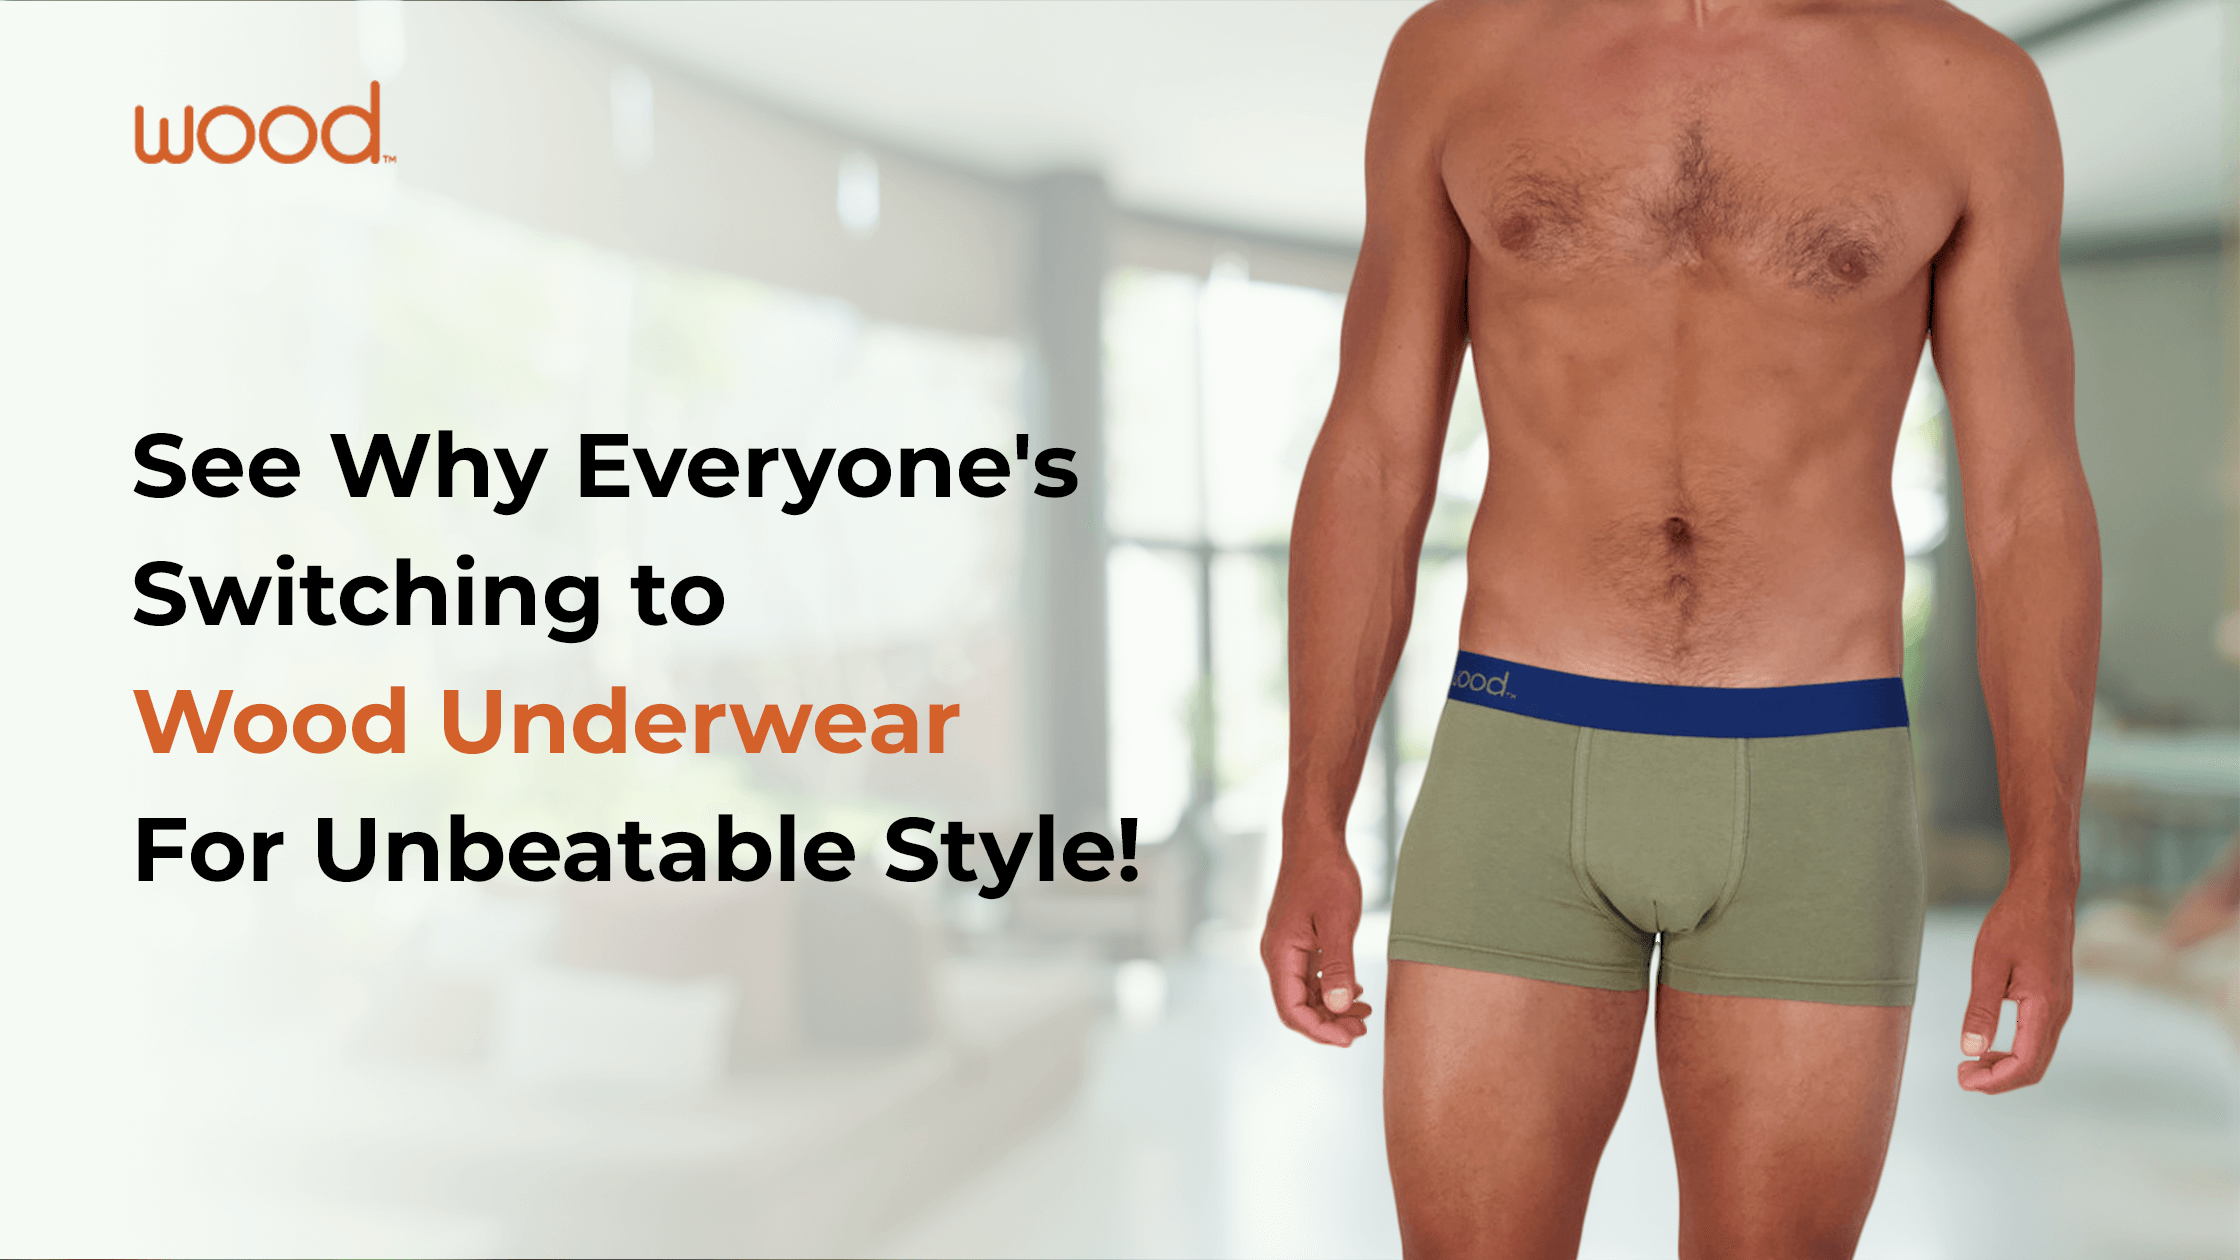 men's premium underwear